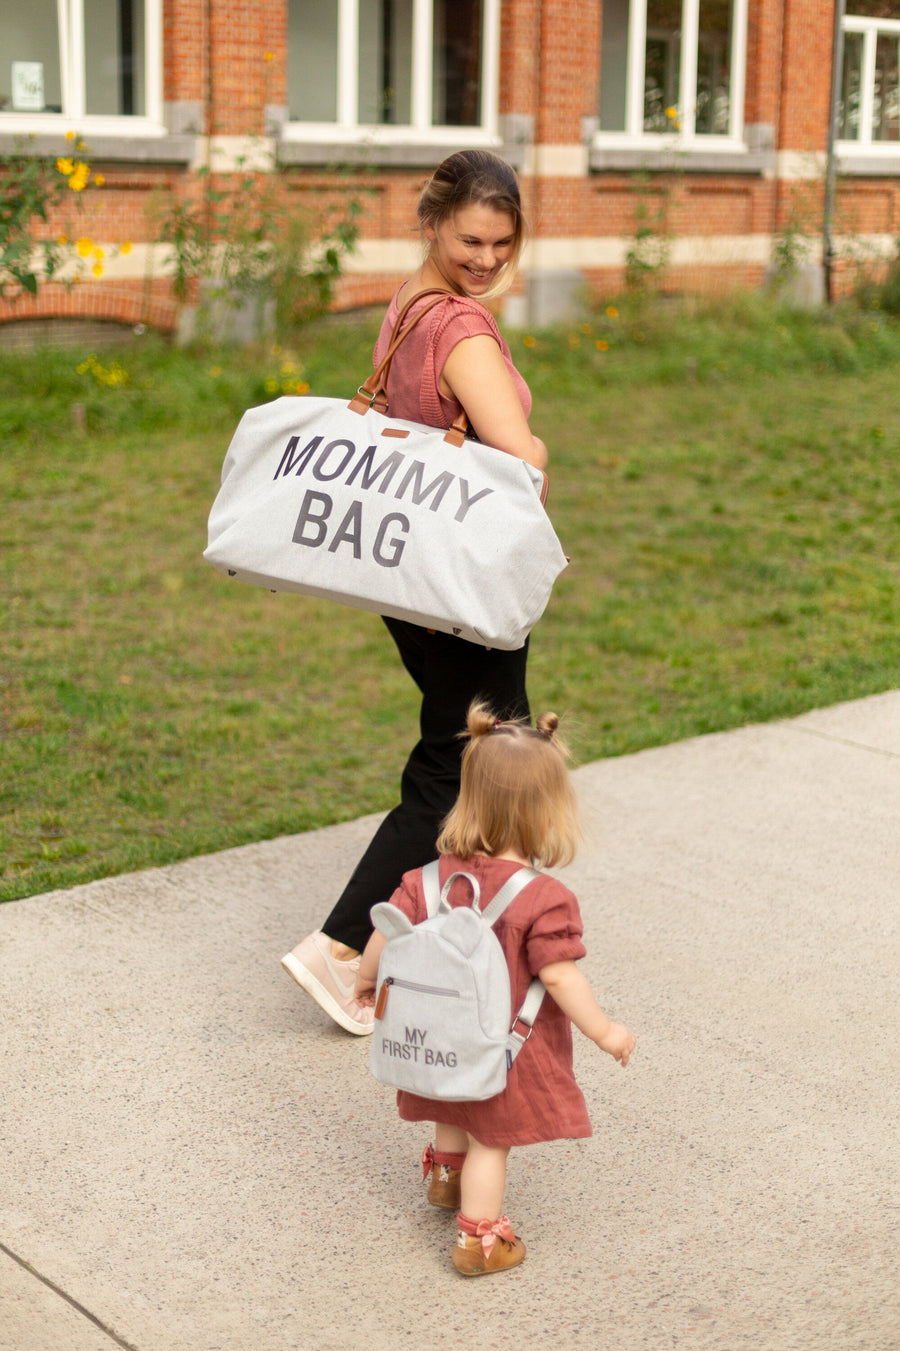 Sac à langer Mommy Bag Canvas Gris - Childhome